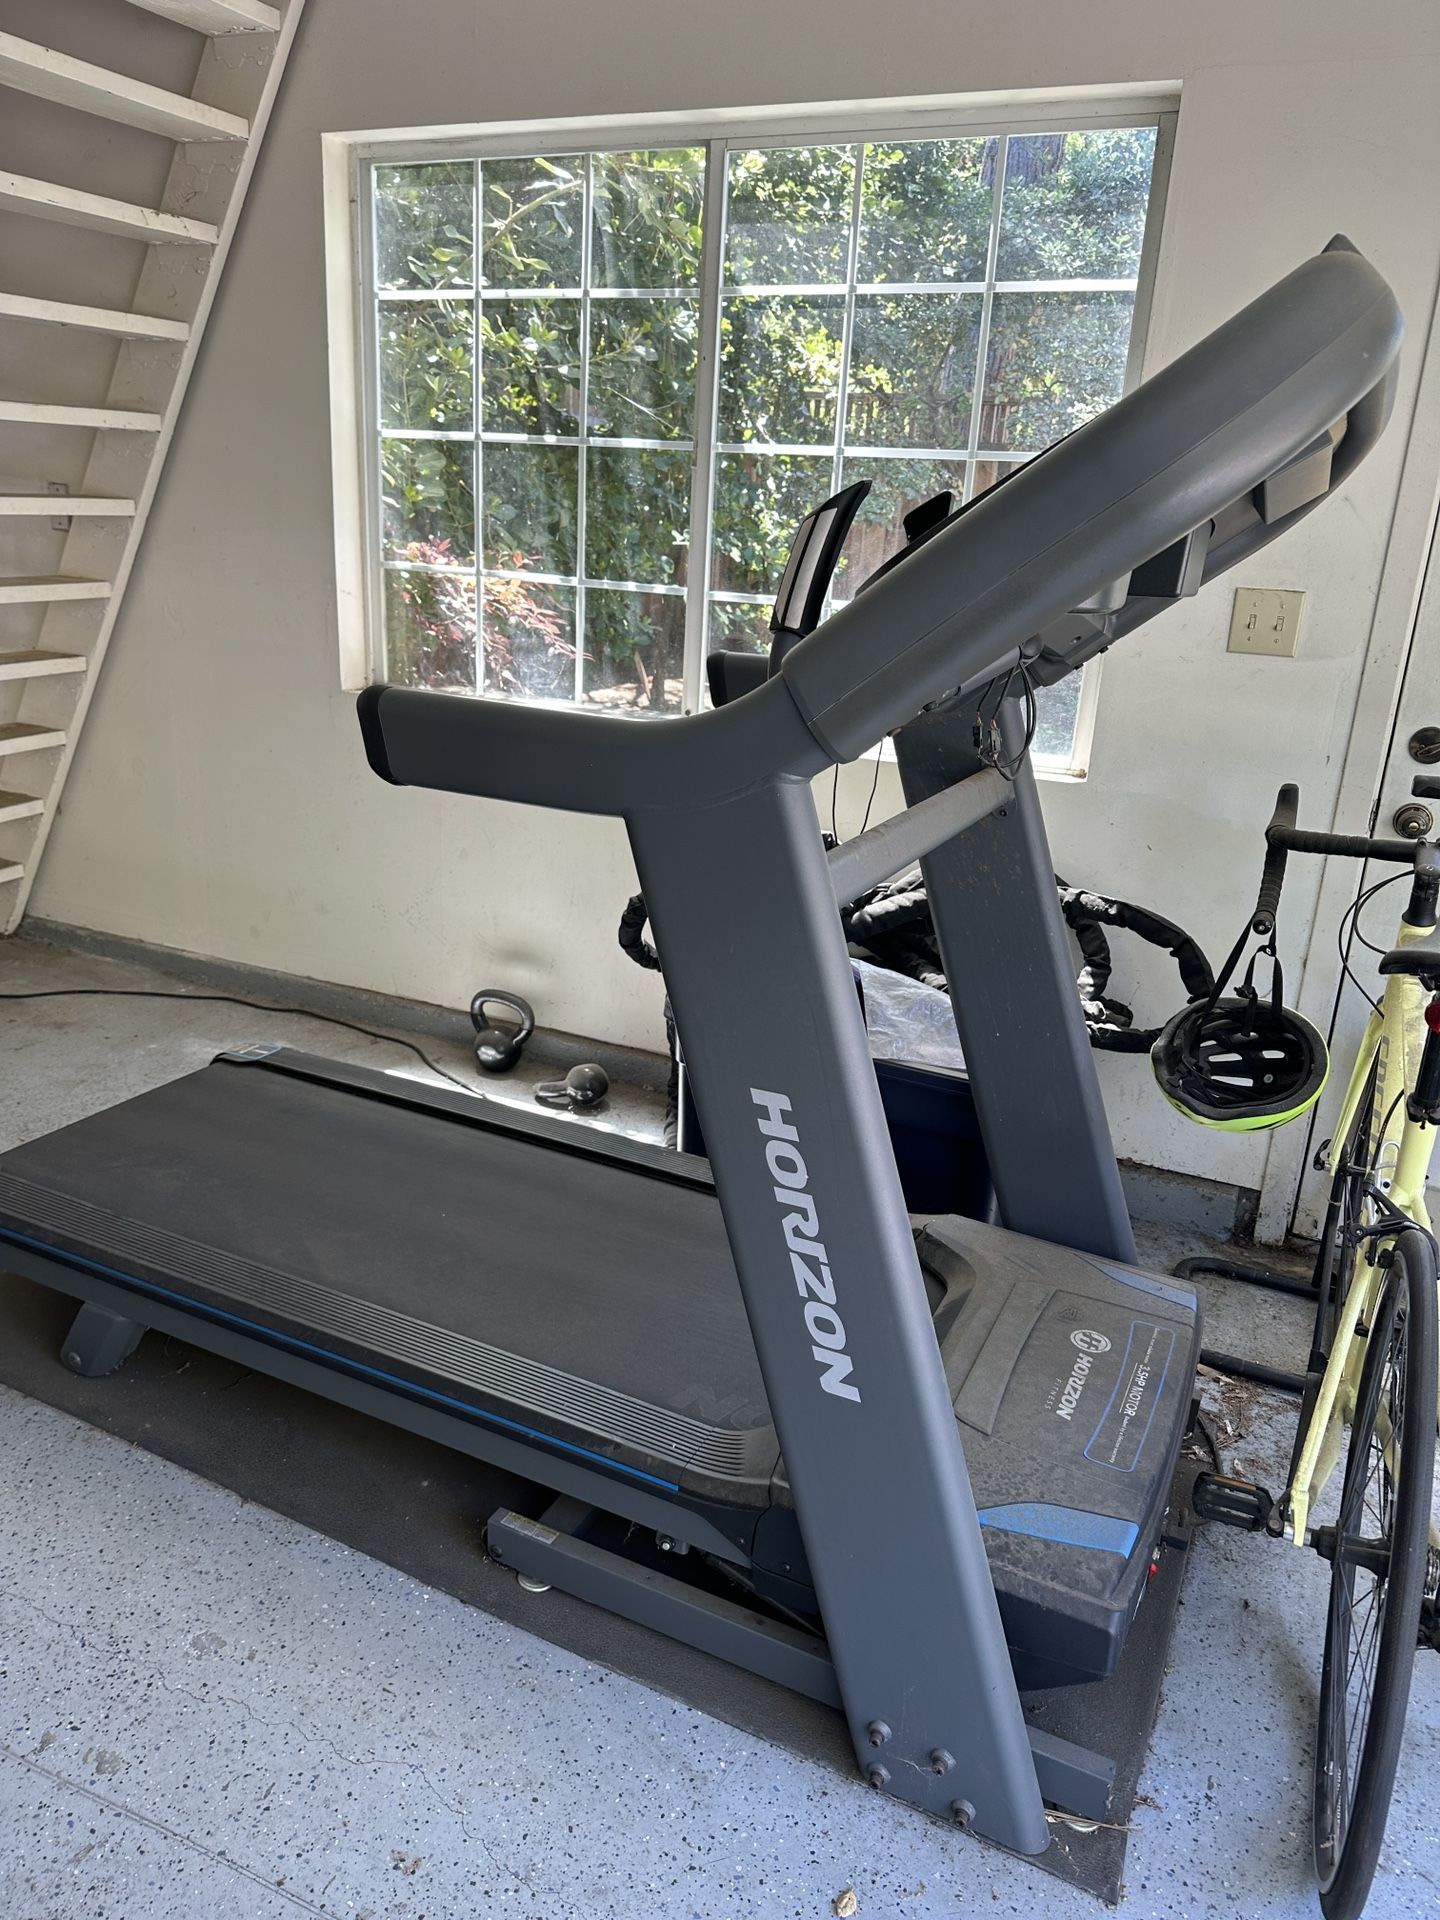 Free Folding Treadmill